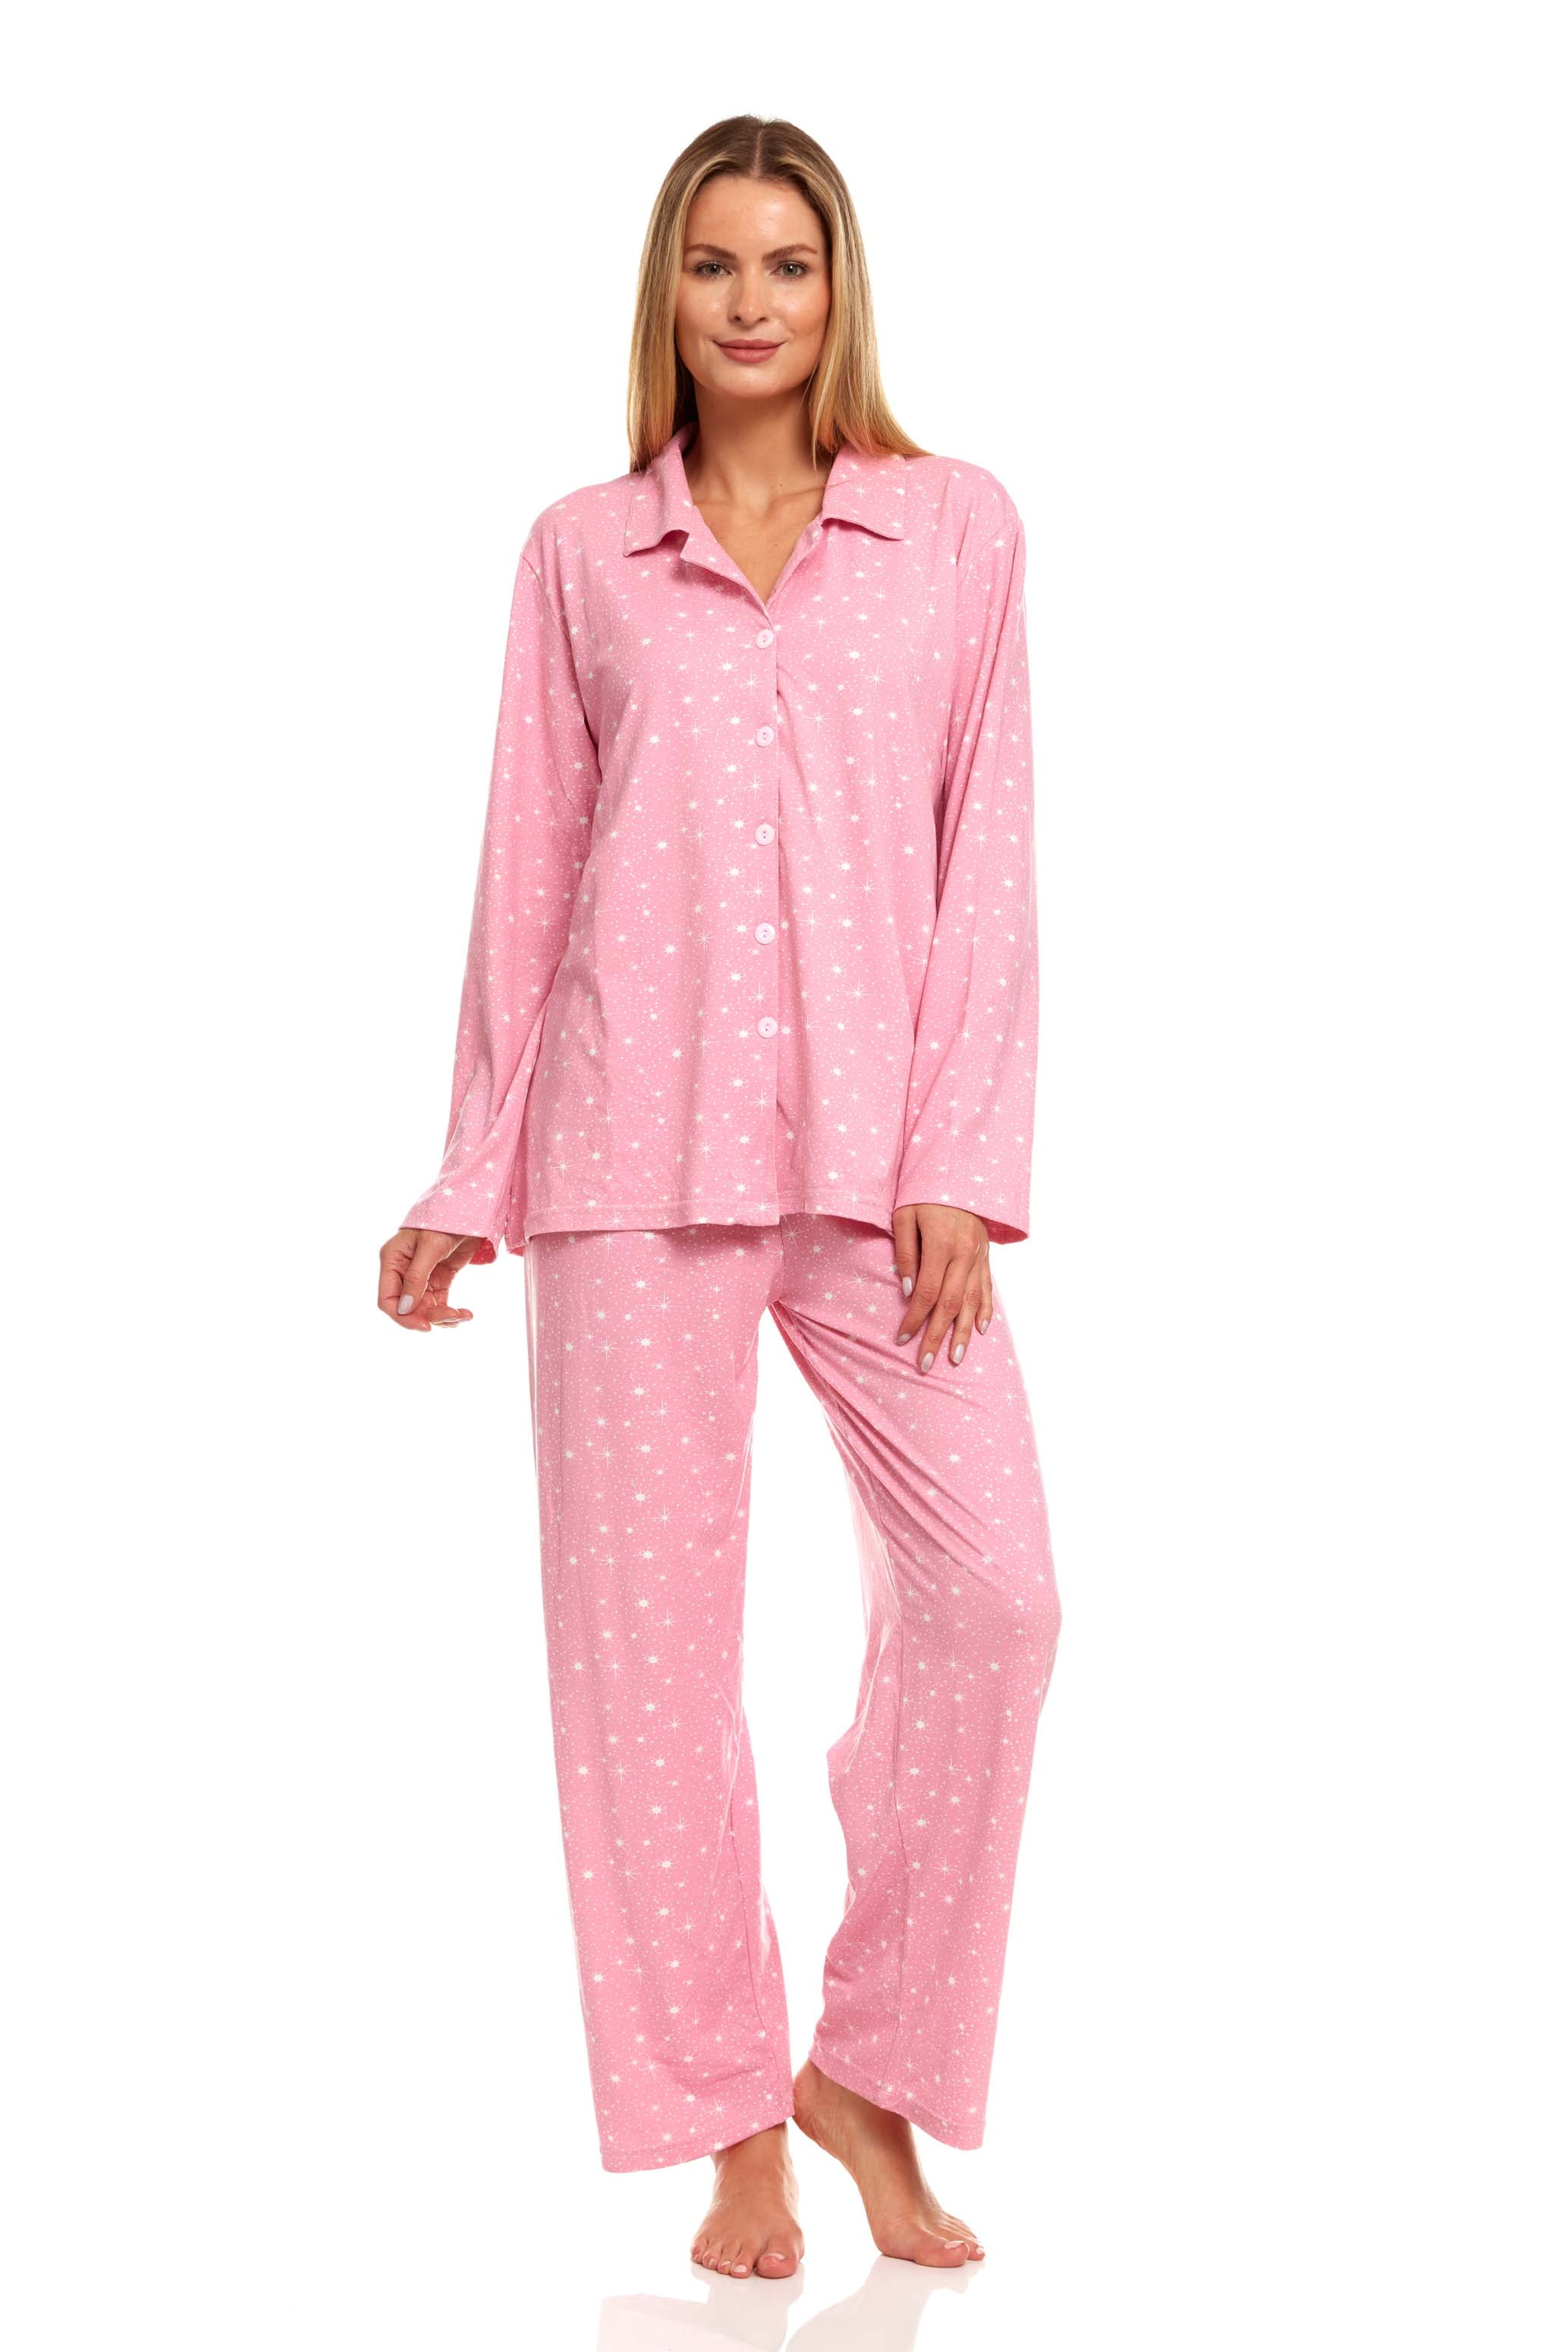 Premiere Fashion - 2158 Womens Sleepwear Pajamas Woman Long Sleeve